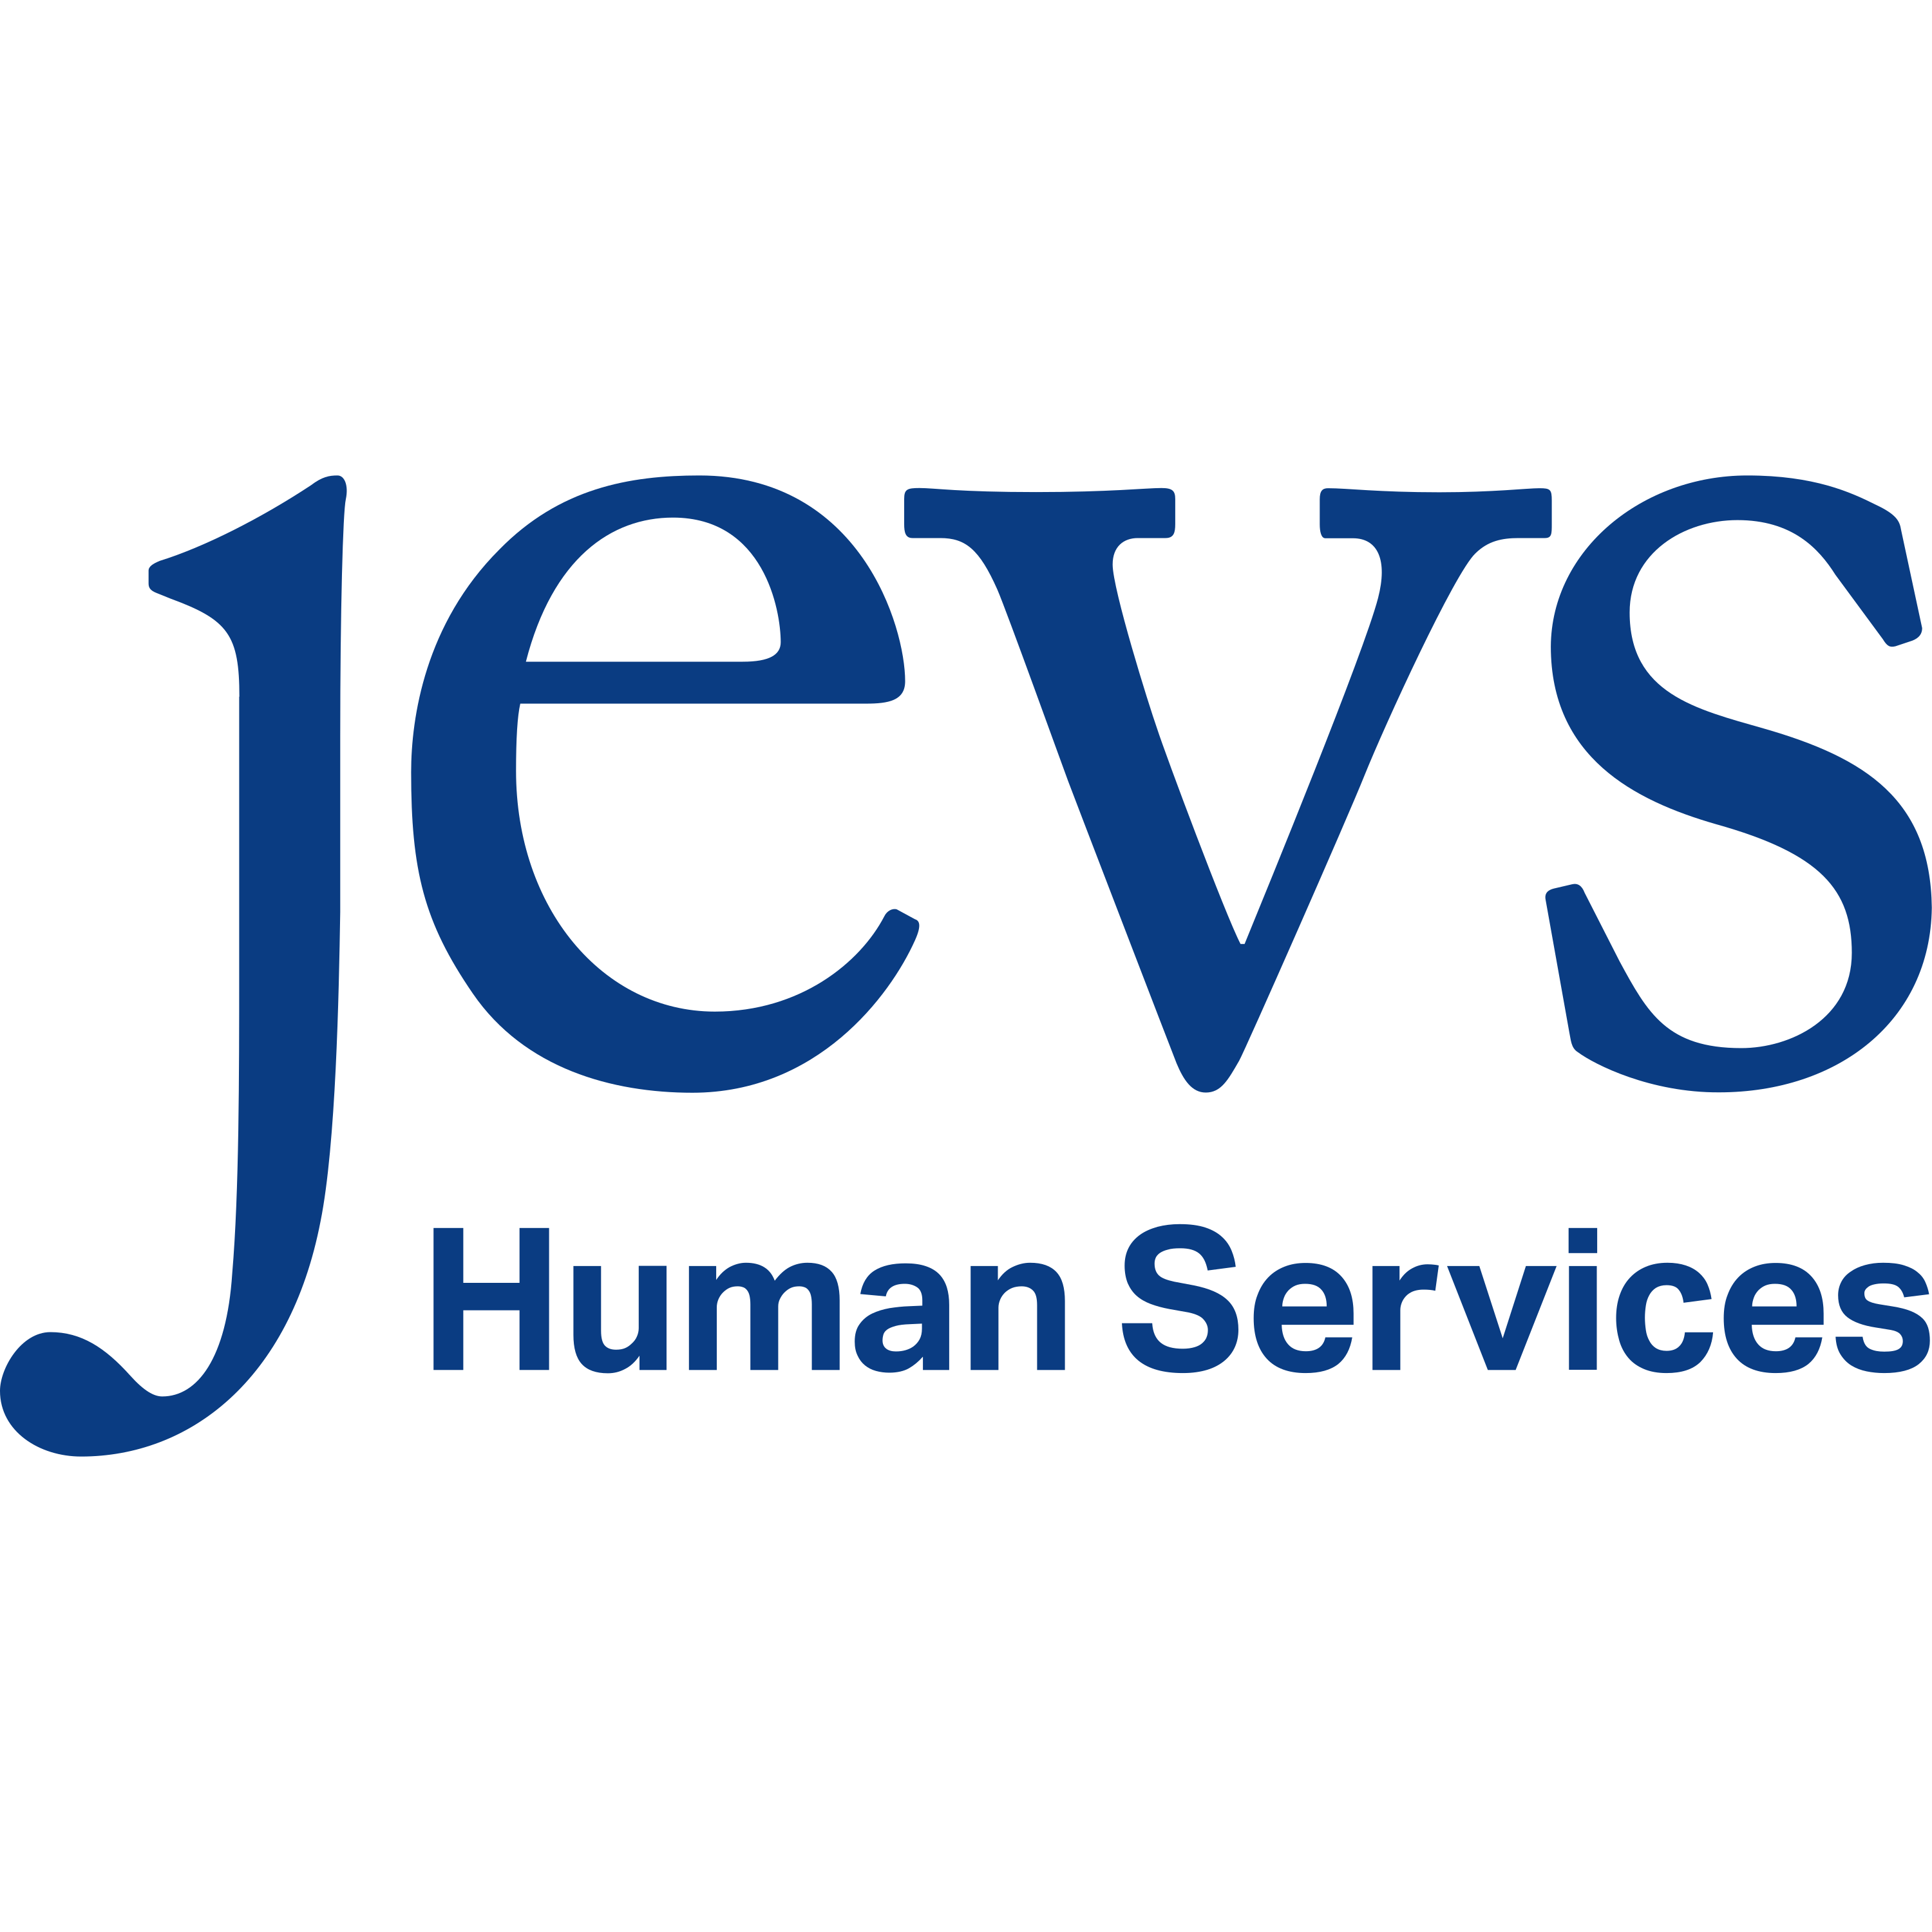 Jevs Human Services Logo  Transparent Image